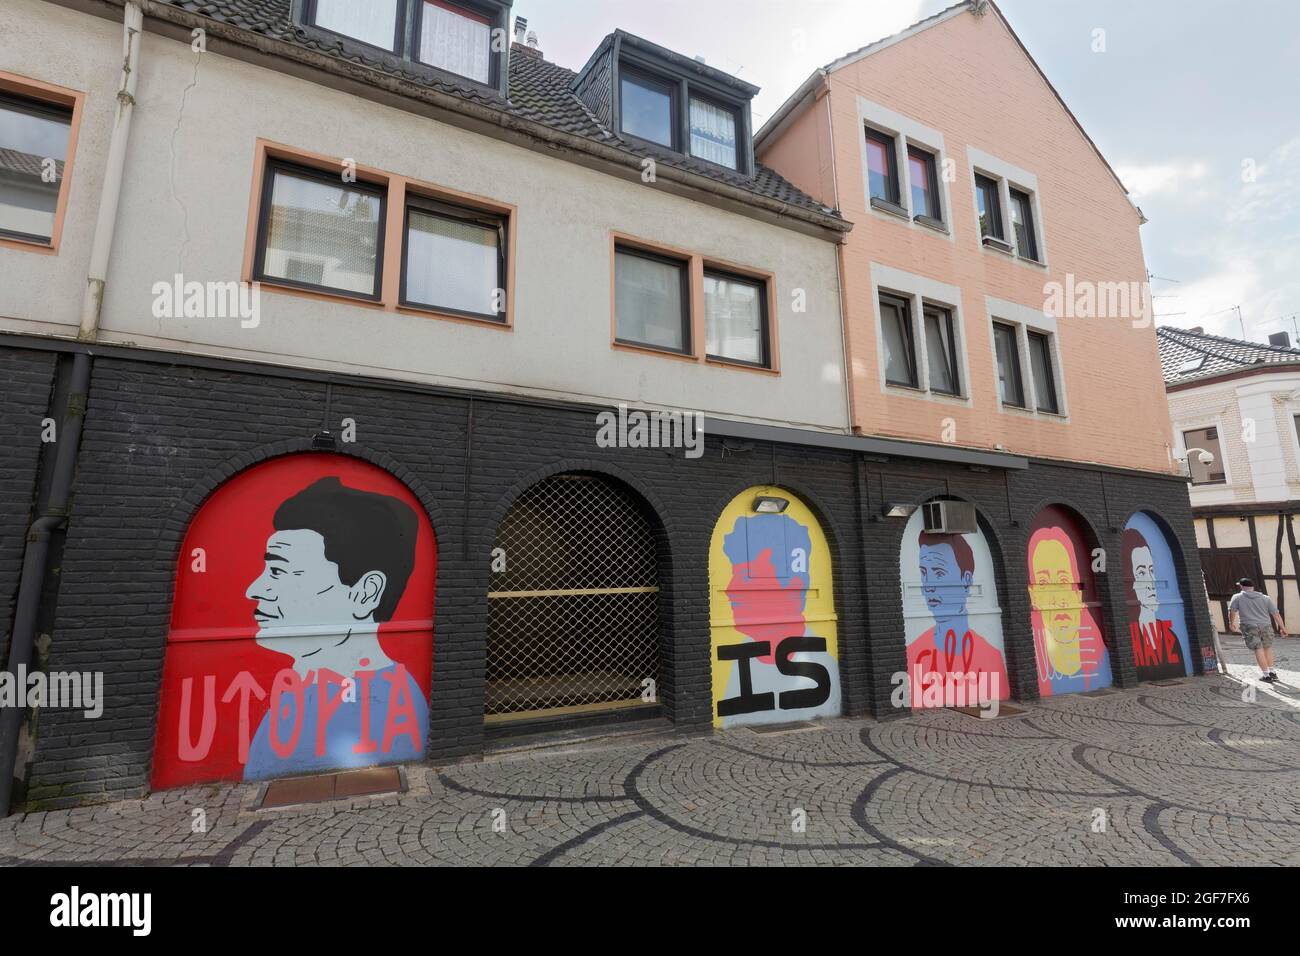 Utopia is all we have, painted facade of a pub, trendy Waldhausener Strasse district, Moechengladbach, North Rhine-Westphalia, Germany Stock Photo